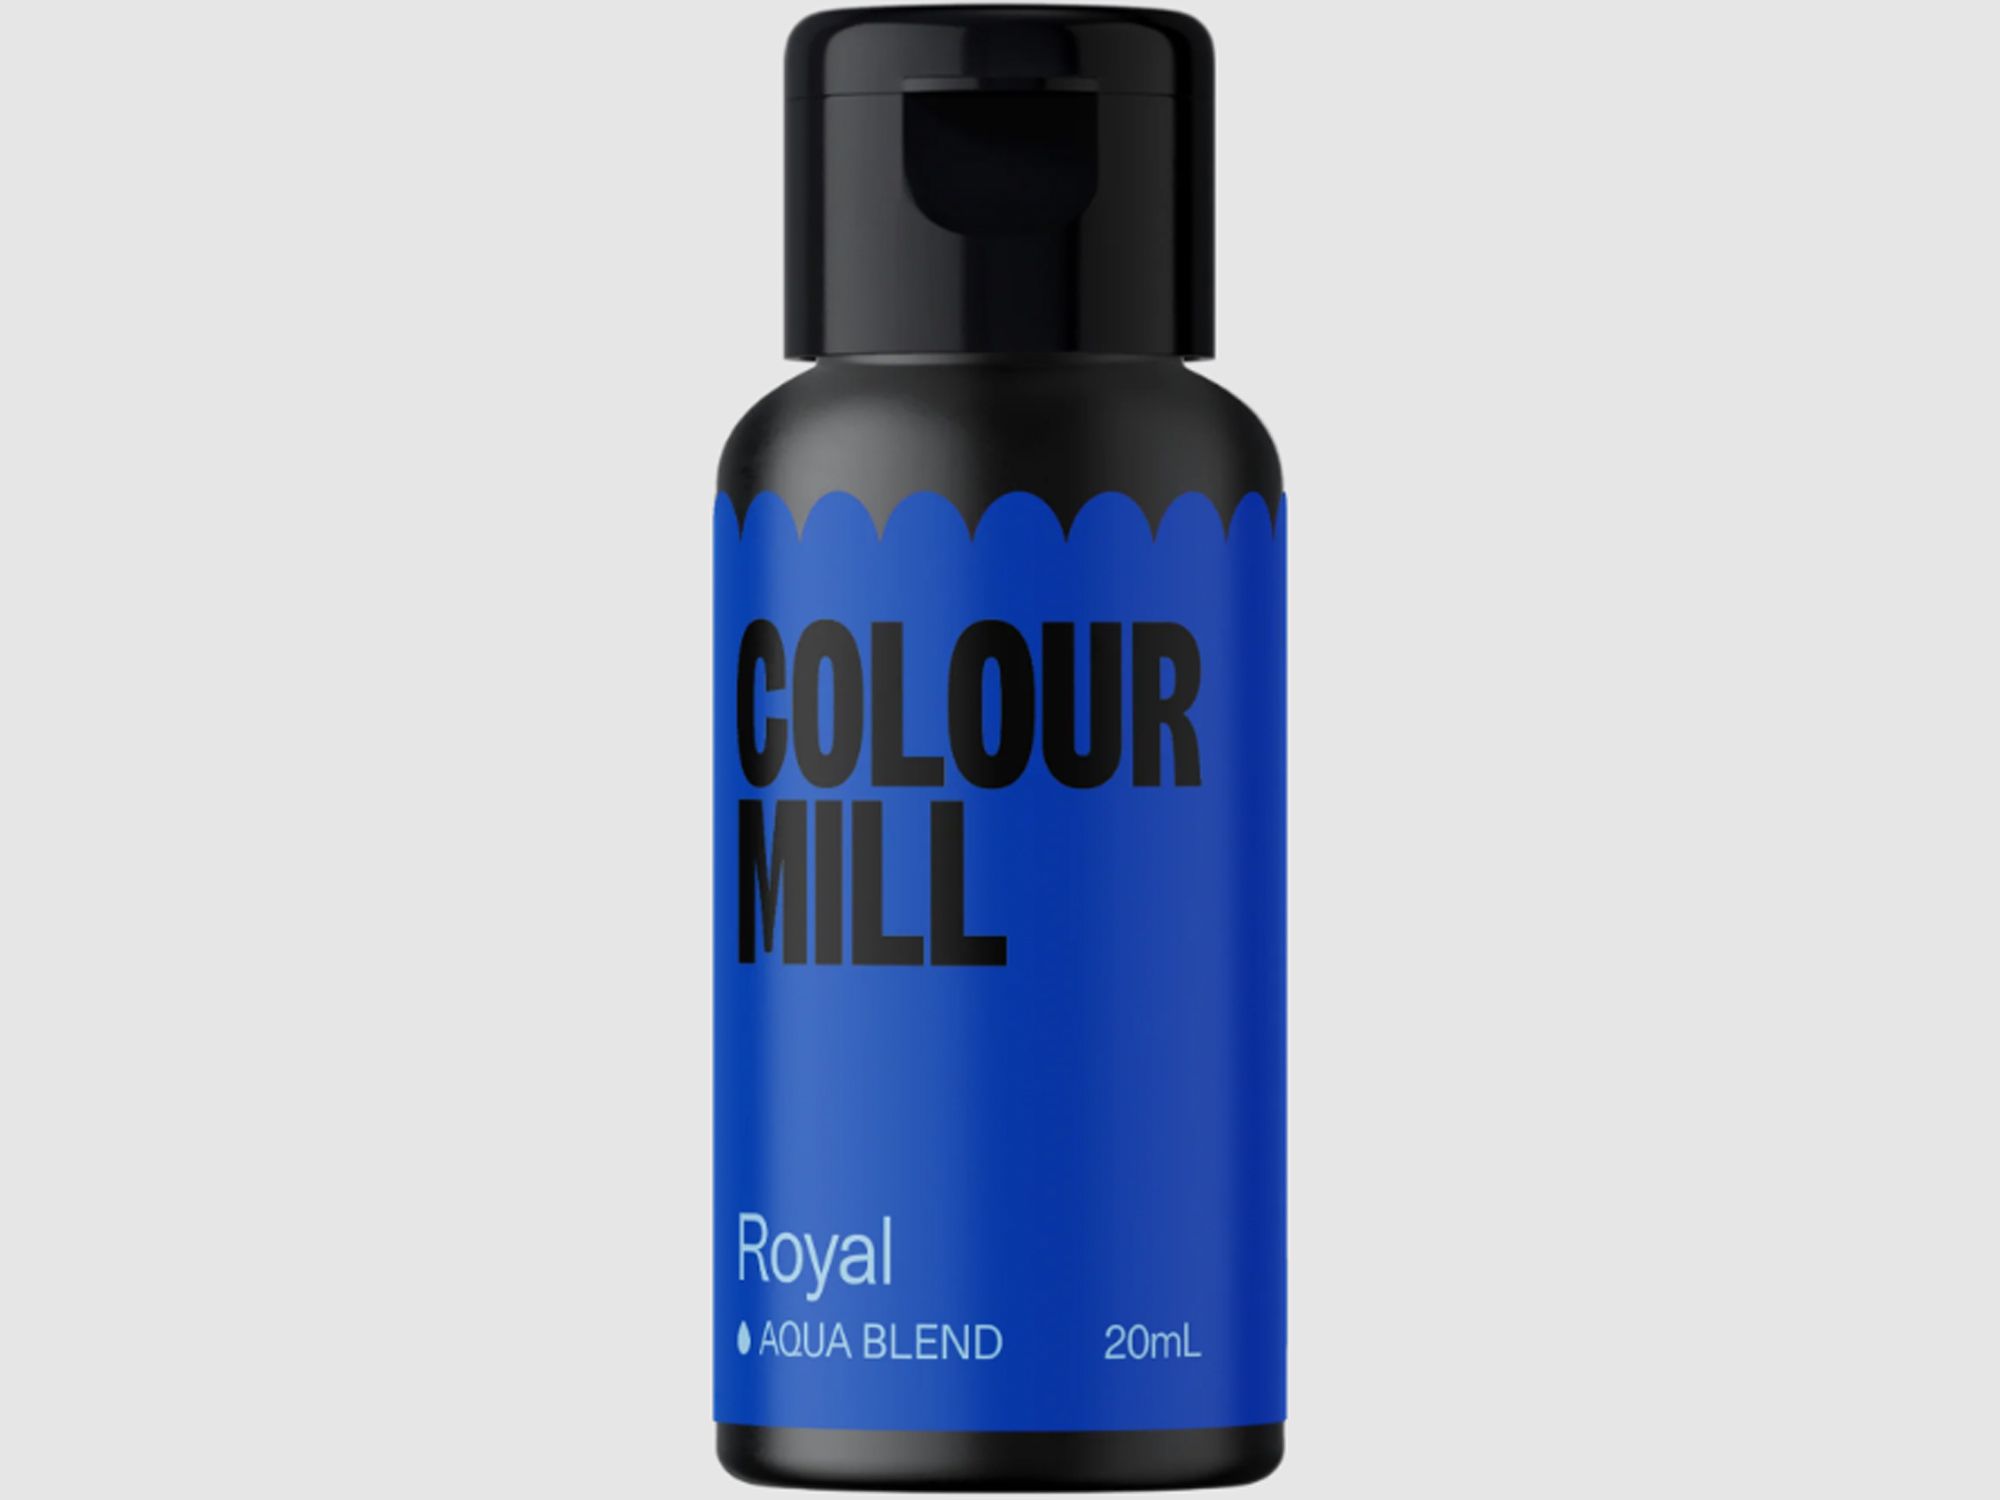 Colour Mill Royal (Aqua Blend) 20ml